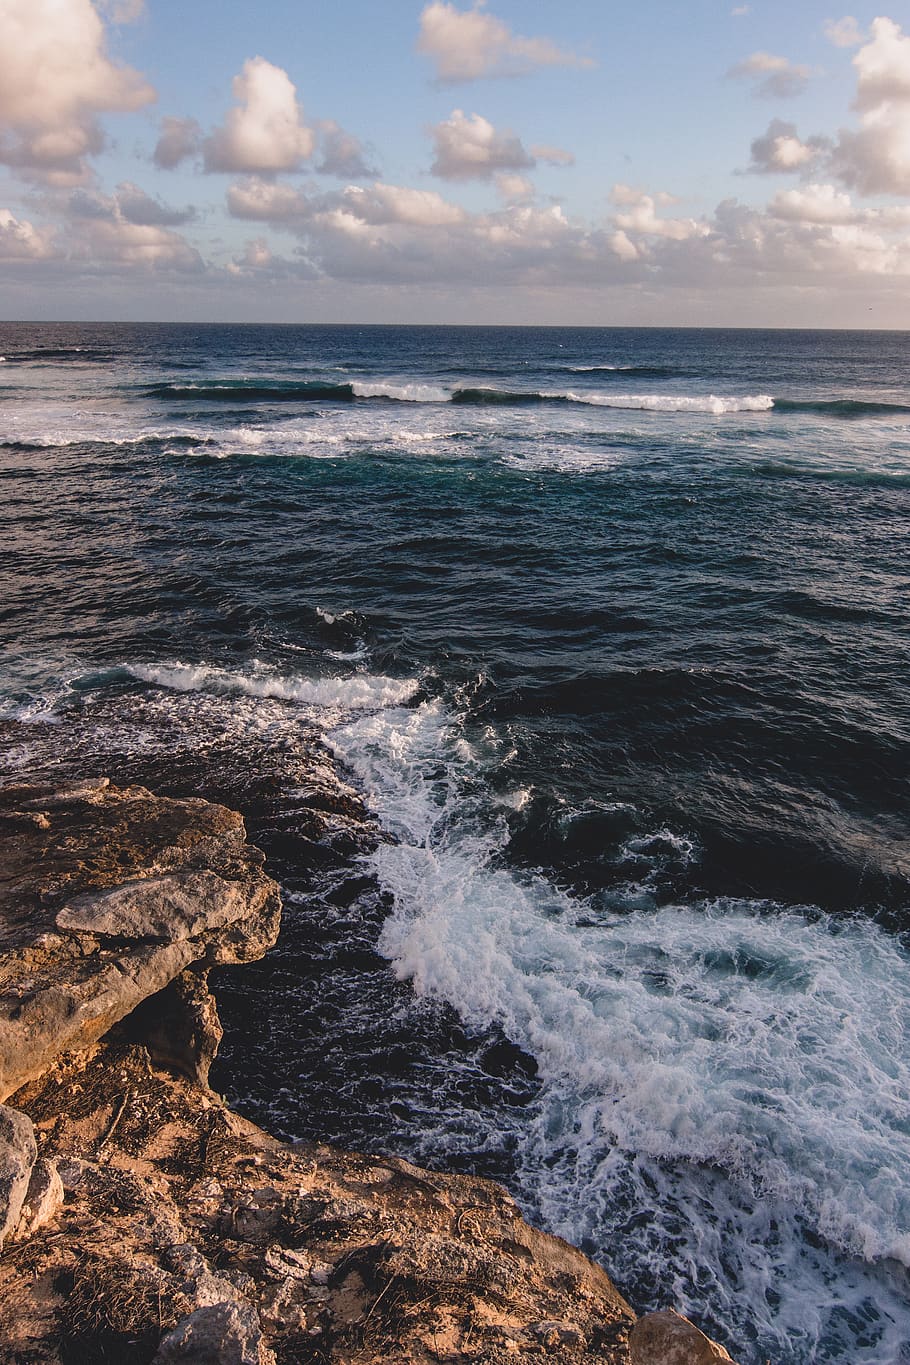 HD wallpaper: hawaii, united states, cliffside, ocean view, wave, waves, deep blue ocean